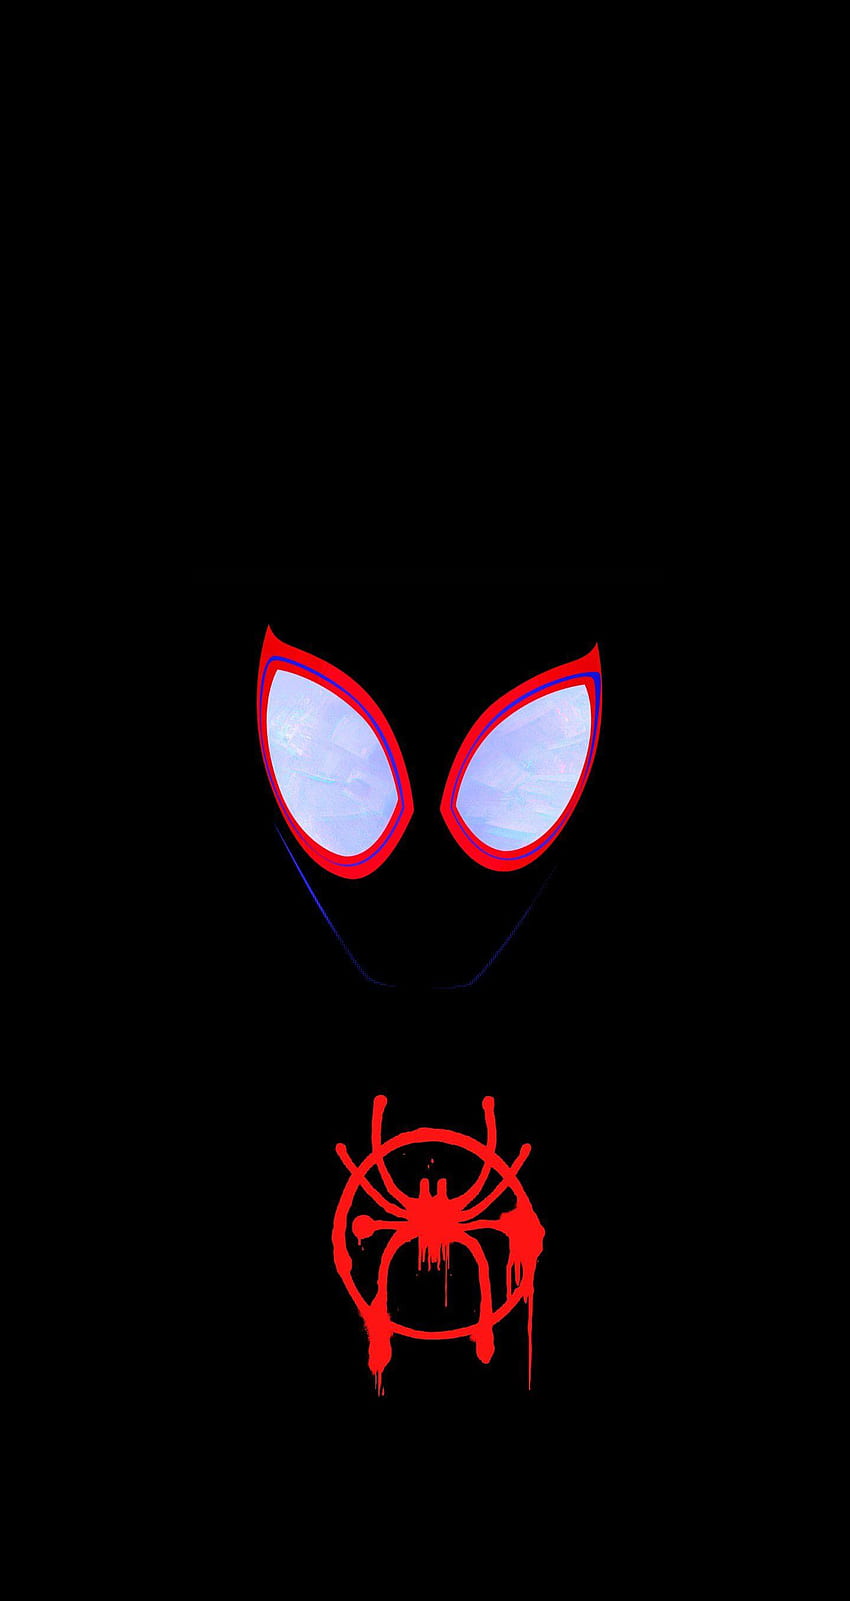 spider-man #spider-man #logo #symbol #emblem #logo #symbol Spider-Man: Into  the Spider-Verse through the… | Miles morales spiderman, Miles spiderman, Miles  morales